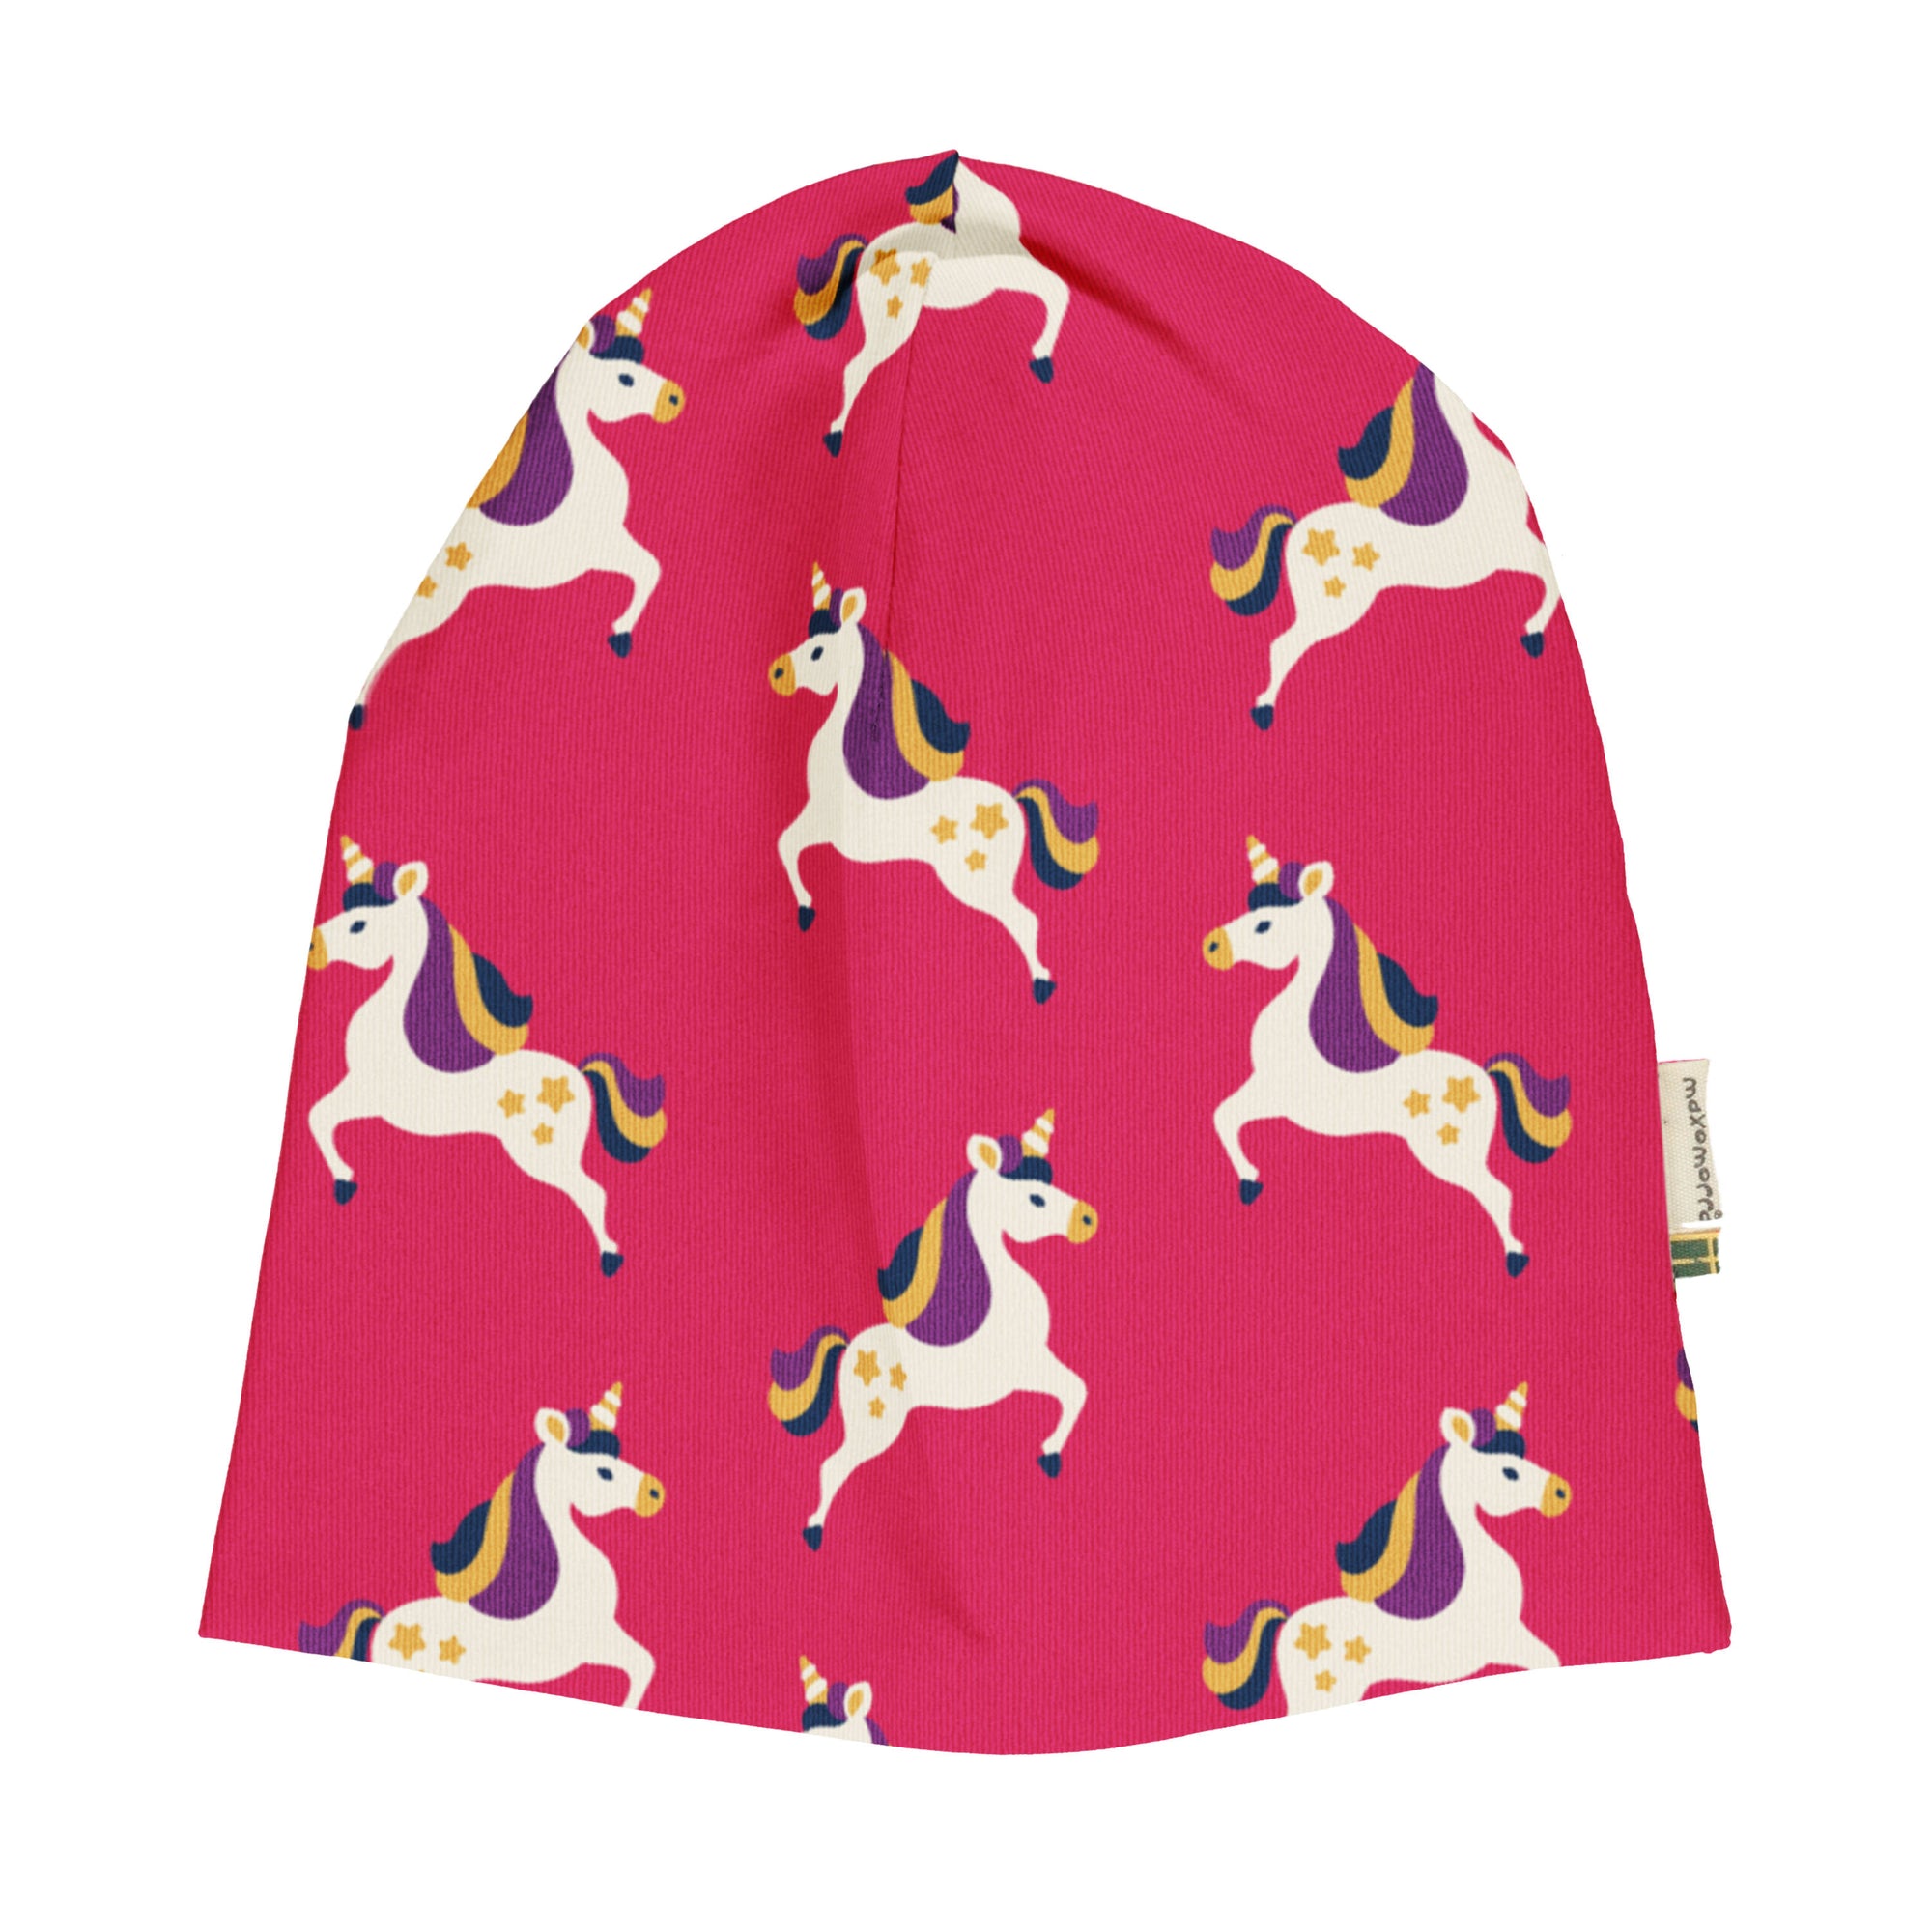 Maxomorra Unicorn Hat Sxa2316 Clothing 48/50 CM / Pink,52/54 CM / Pink,56/58 CM / Pink